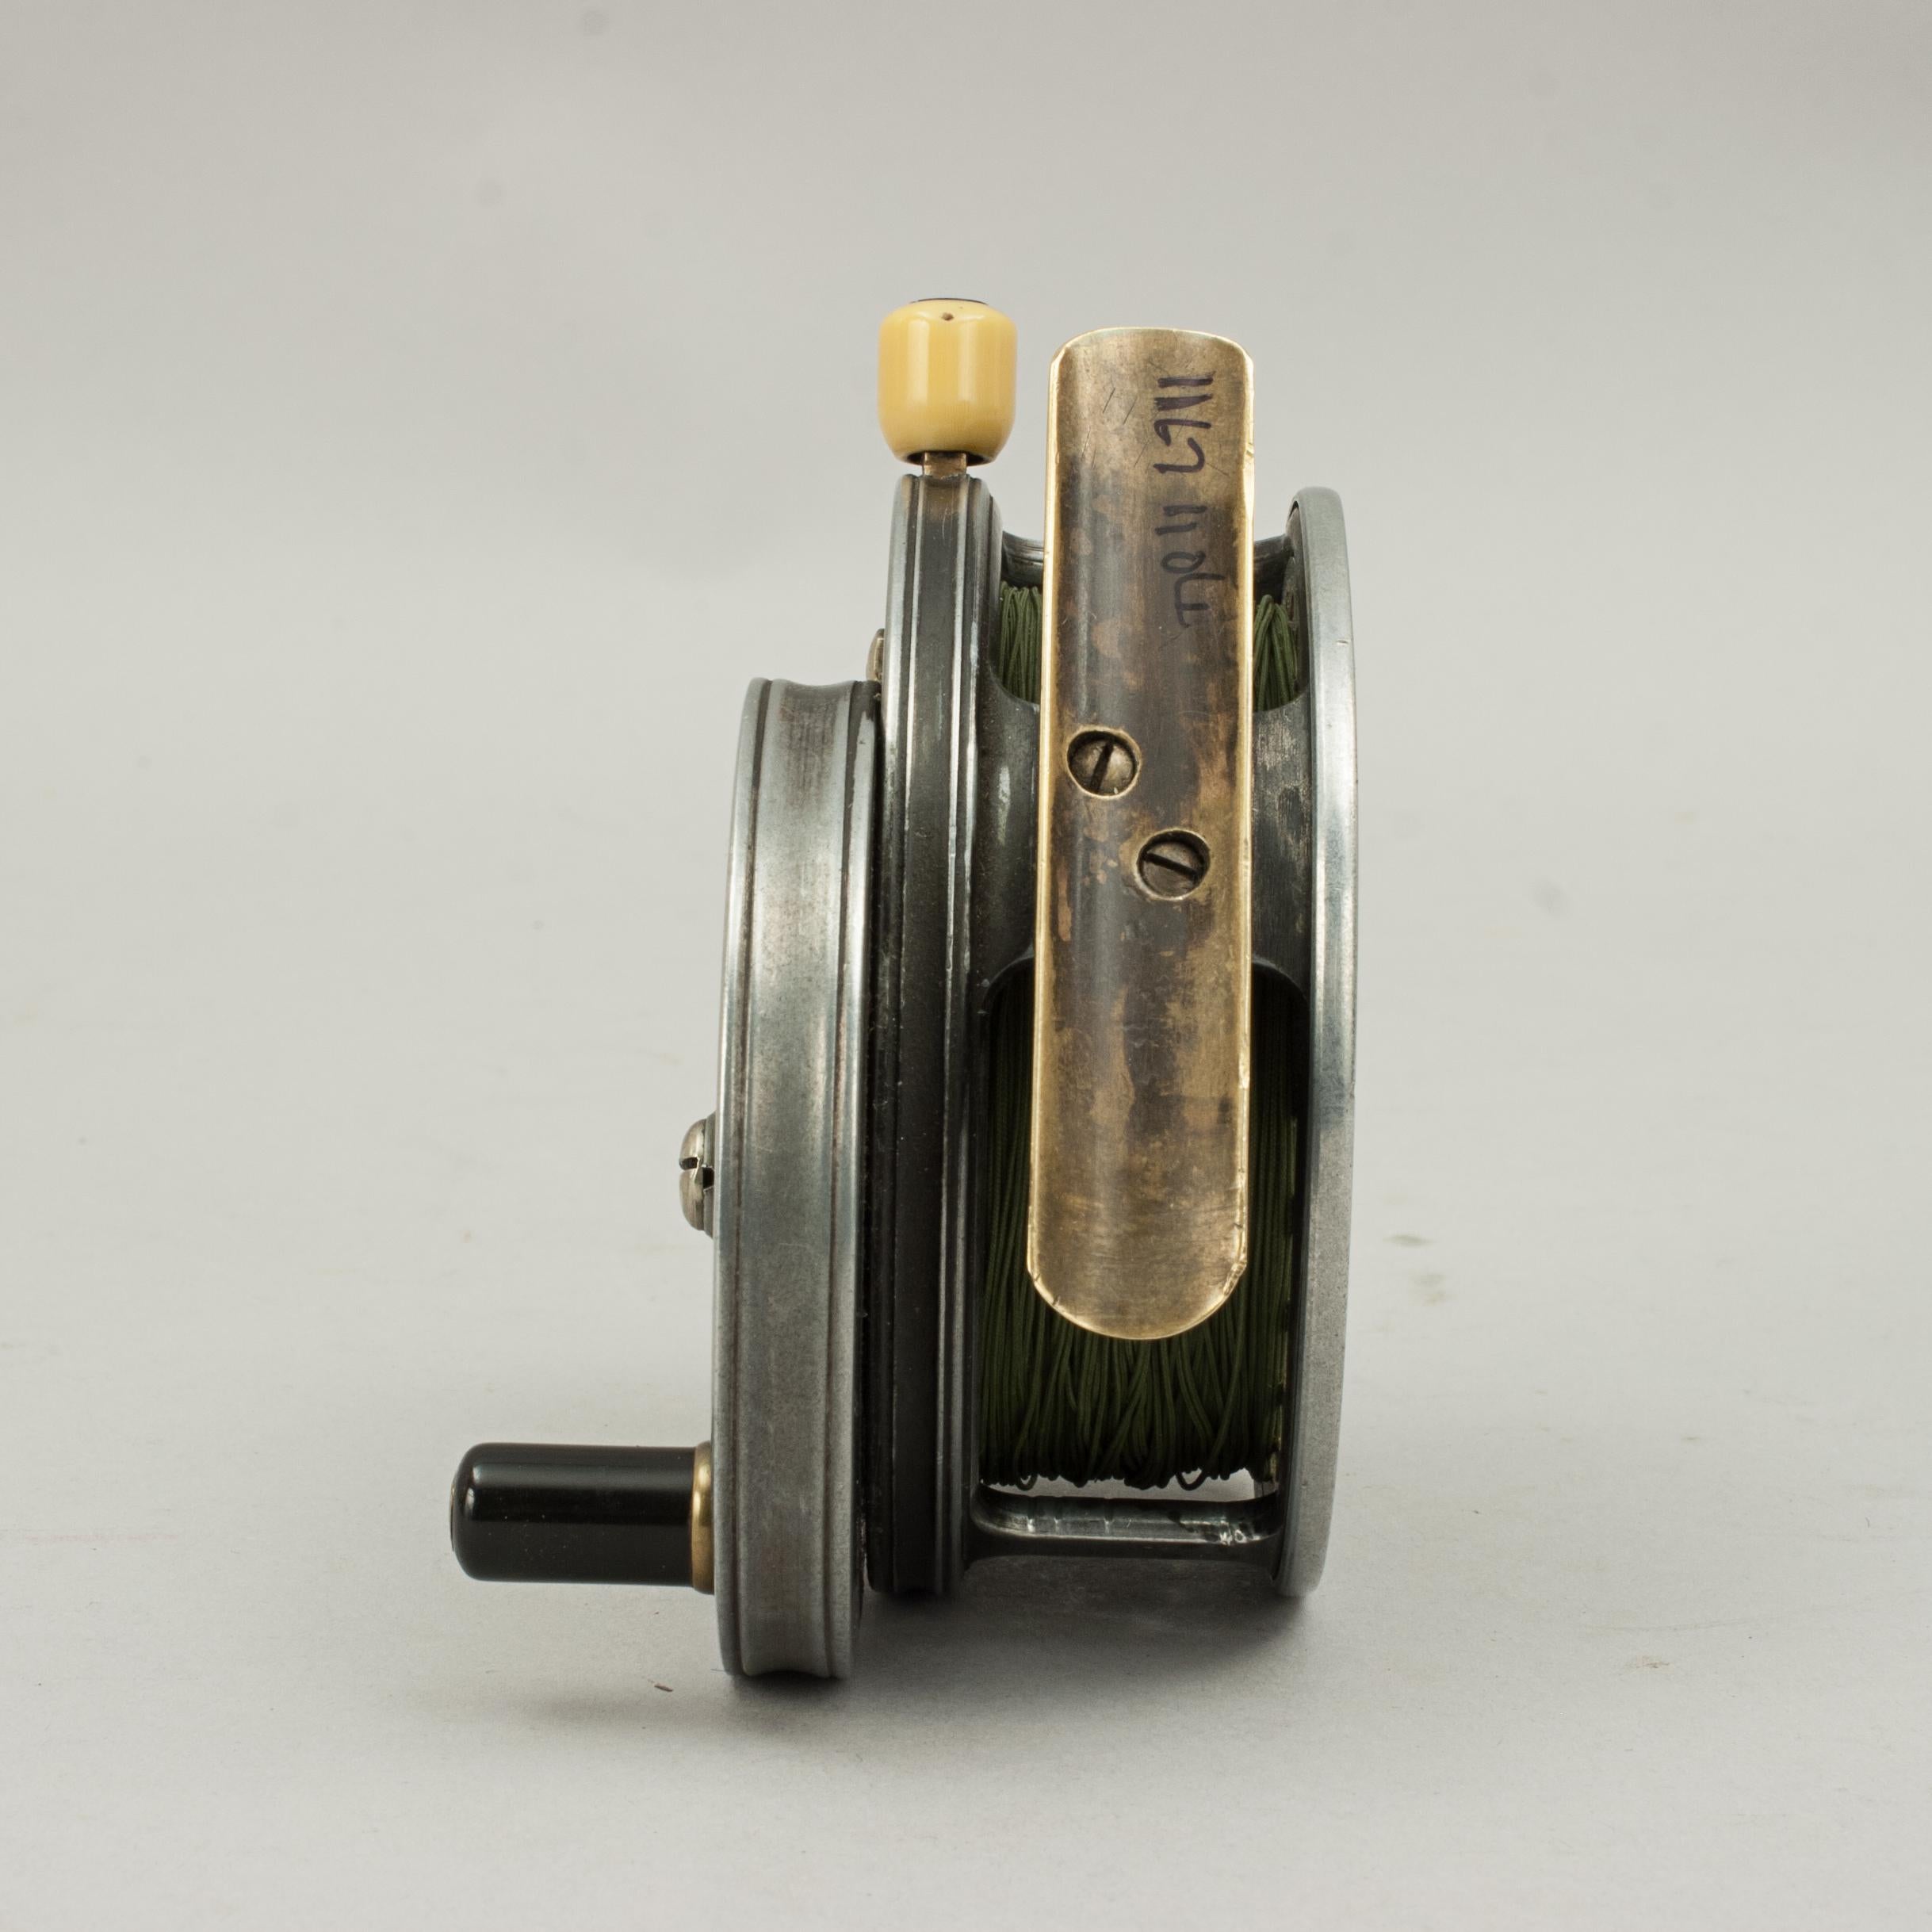 Carrete antiguo Hardy Silex Multiplyer, para pescar truchas a mosca mediados del siglo XX en venta